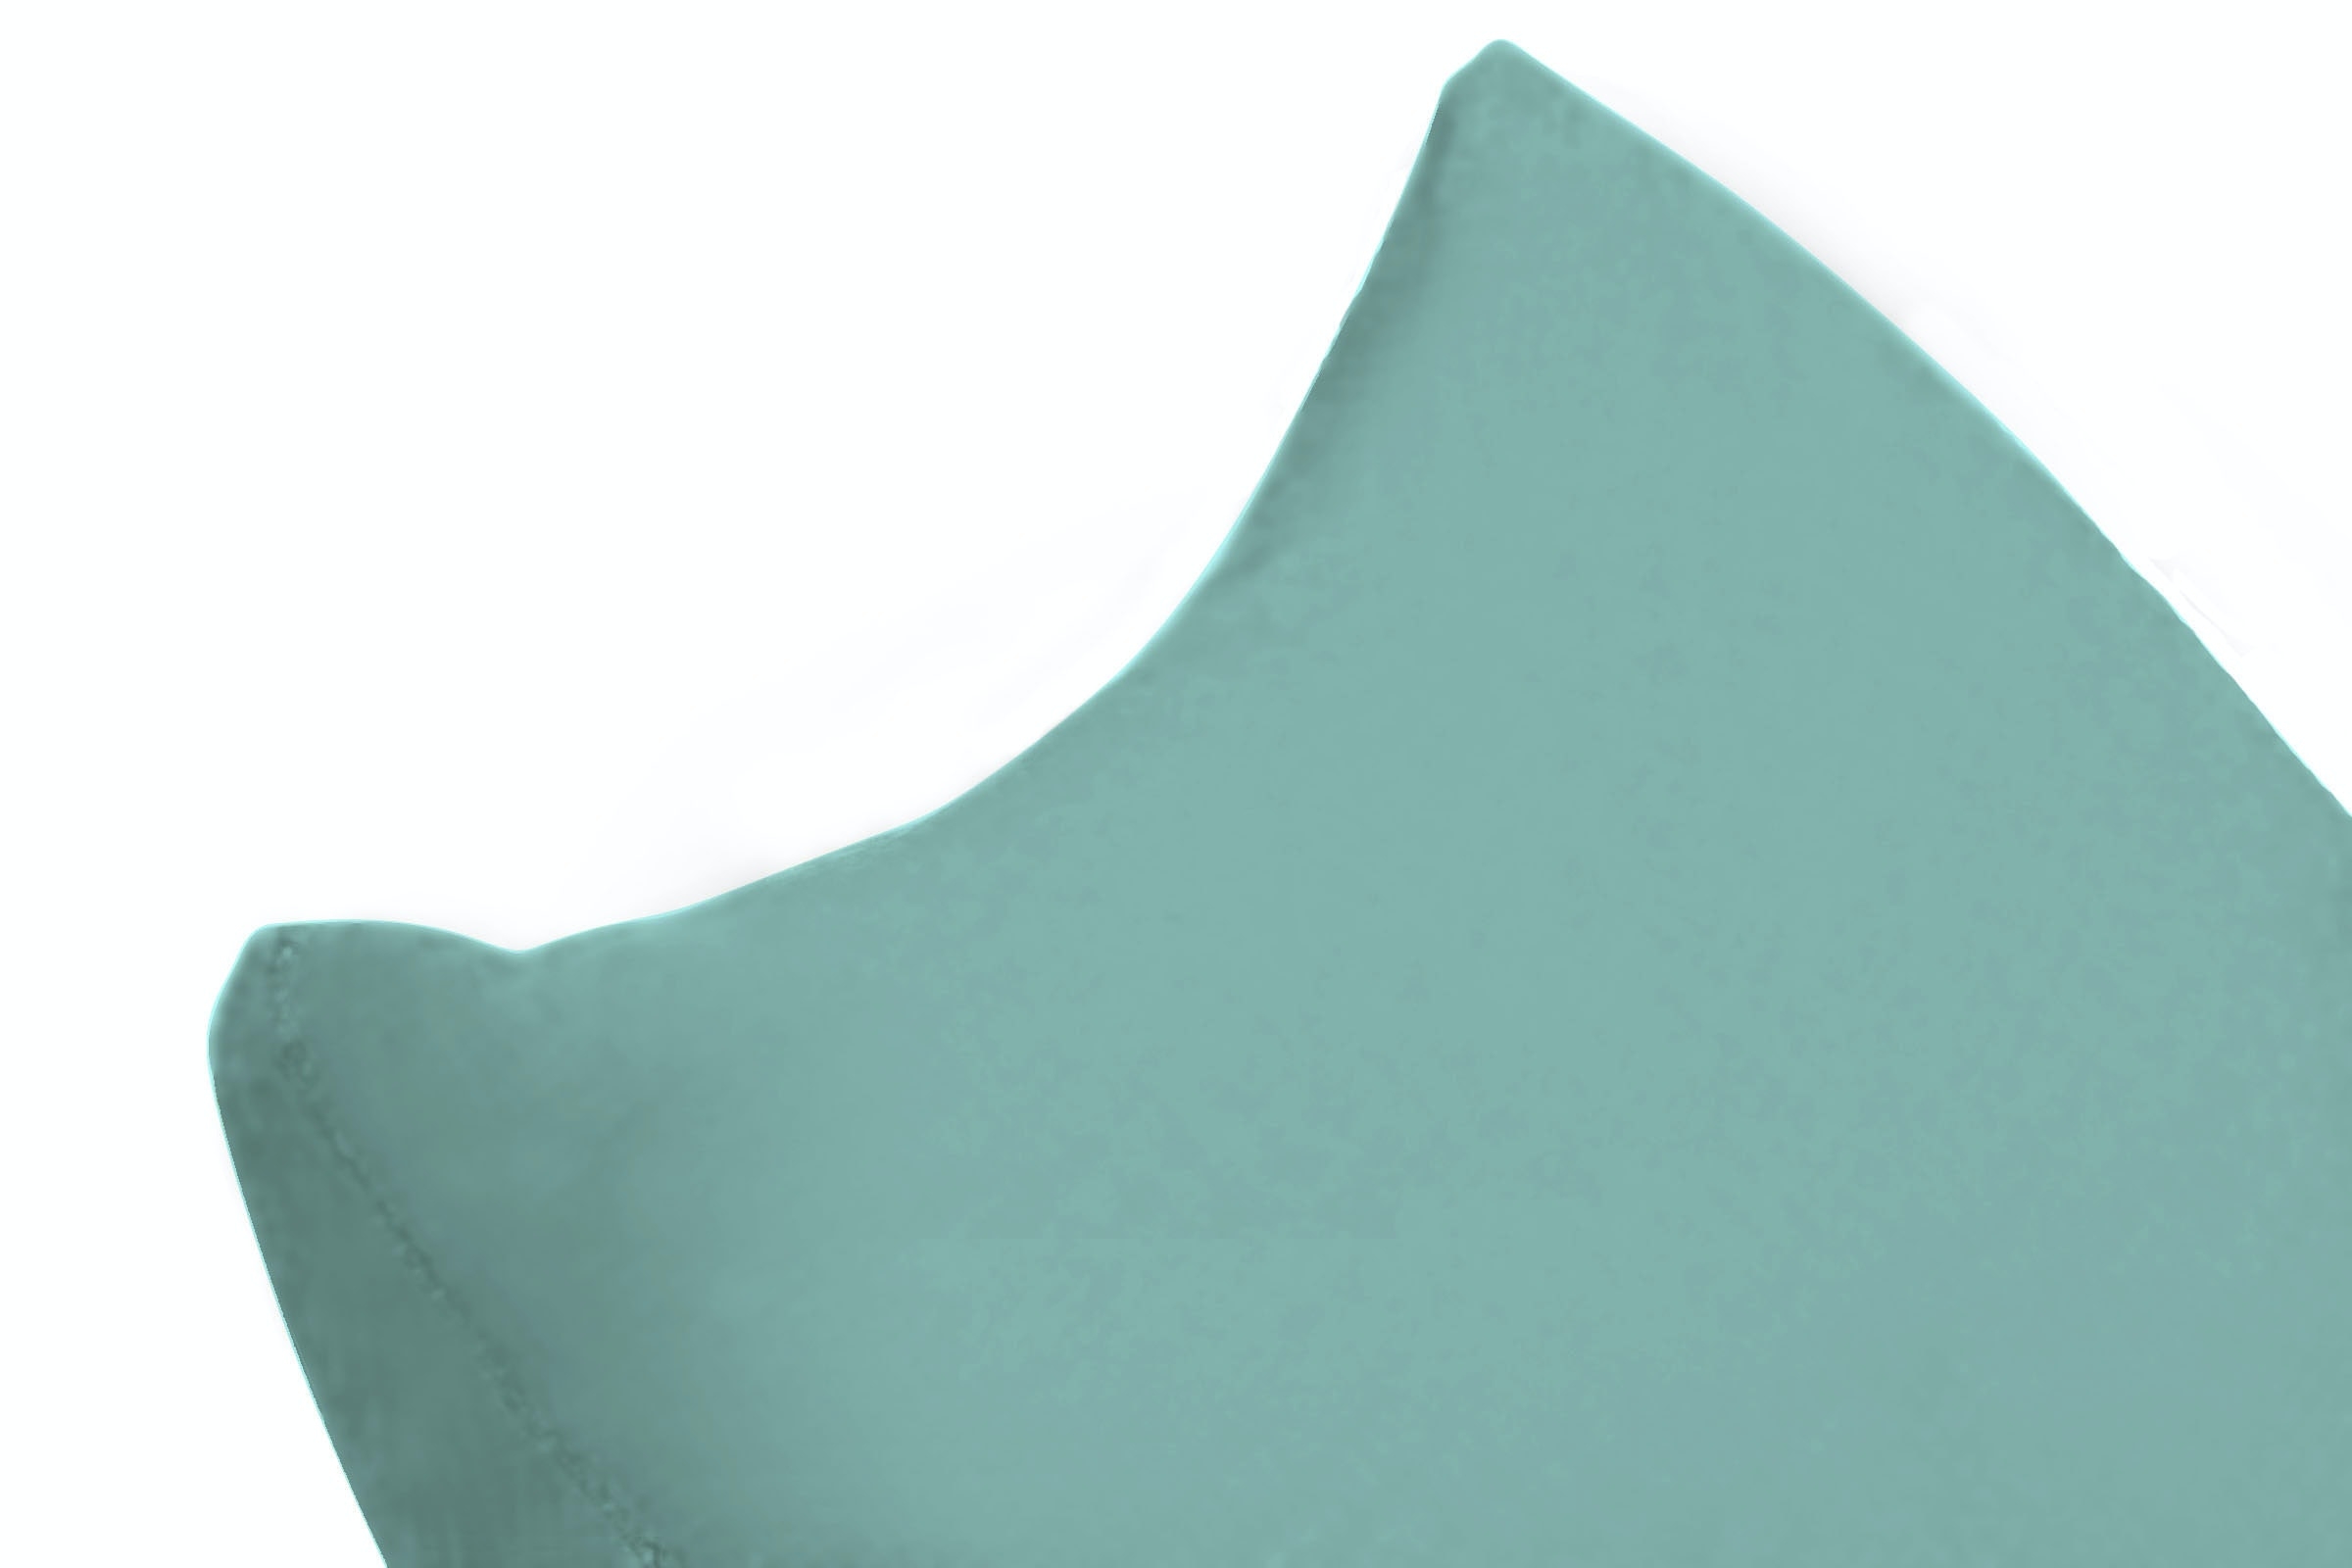 Green Decorative Mid Century Modern Knife Edge Pillows 18 x 18 (Set of 2) - Essence Aqua - Image 3